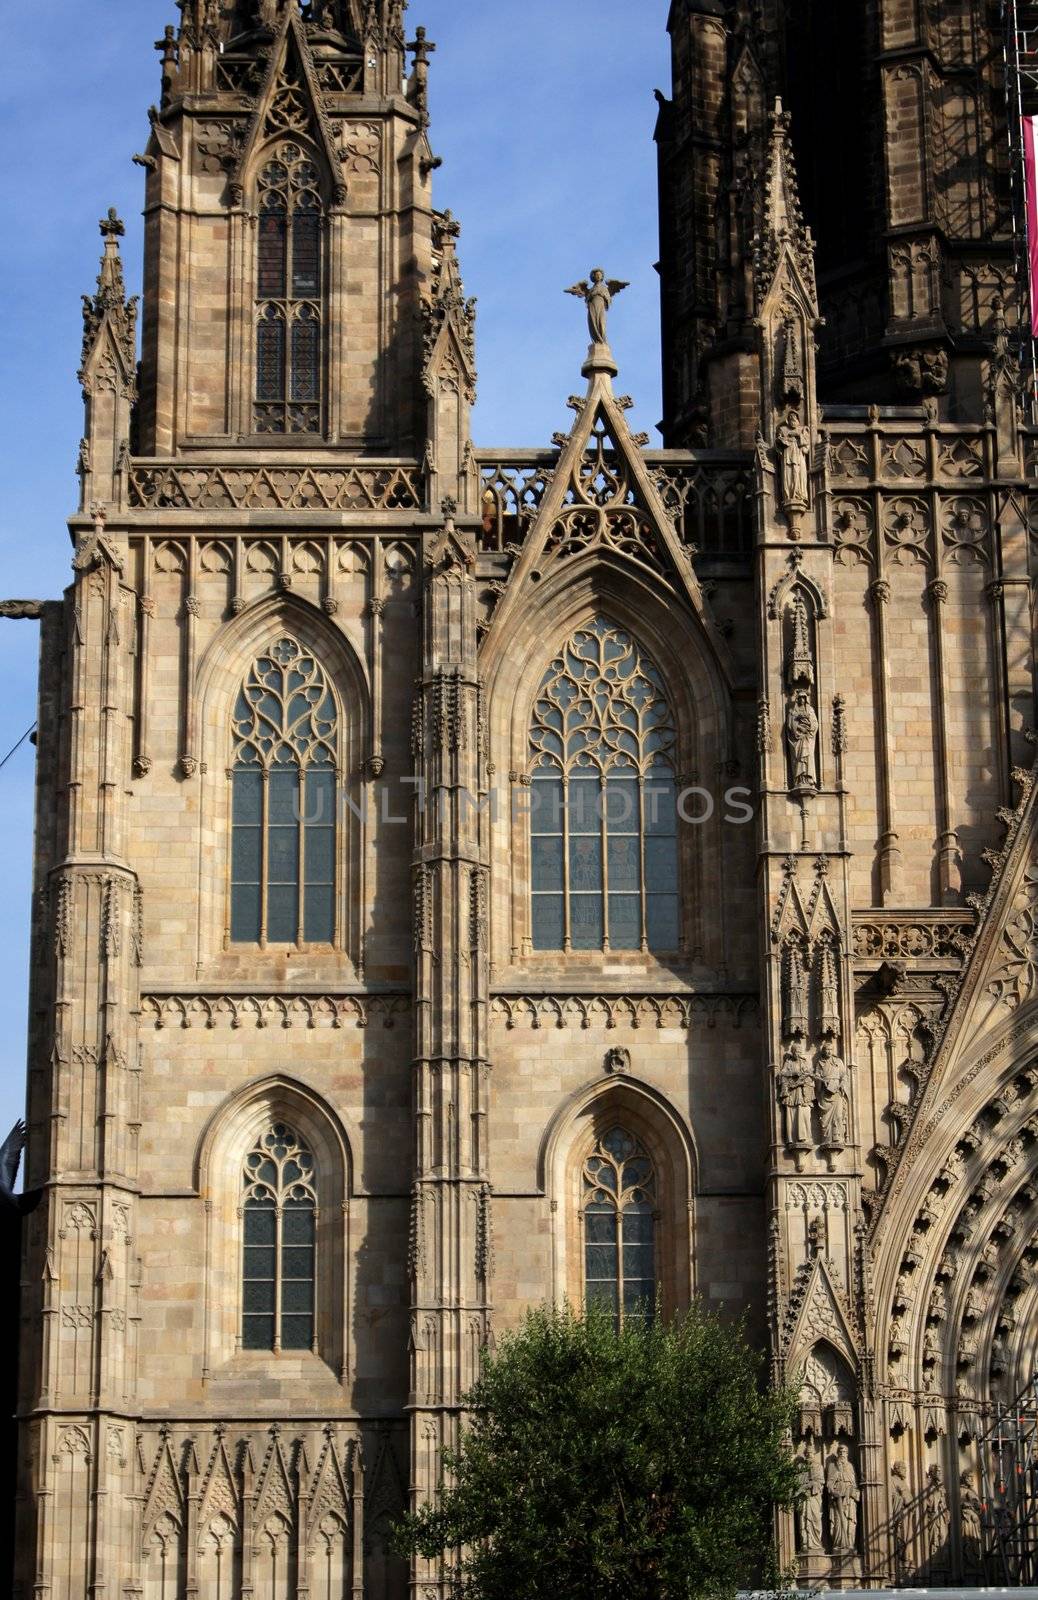 Facade of gothic cathedral Santa Maria del mar in Barcelona, Spain by Elet